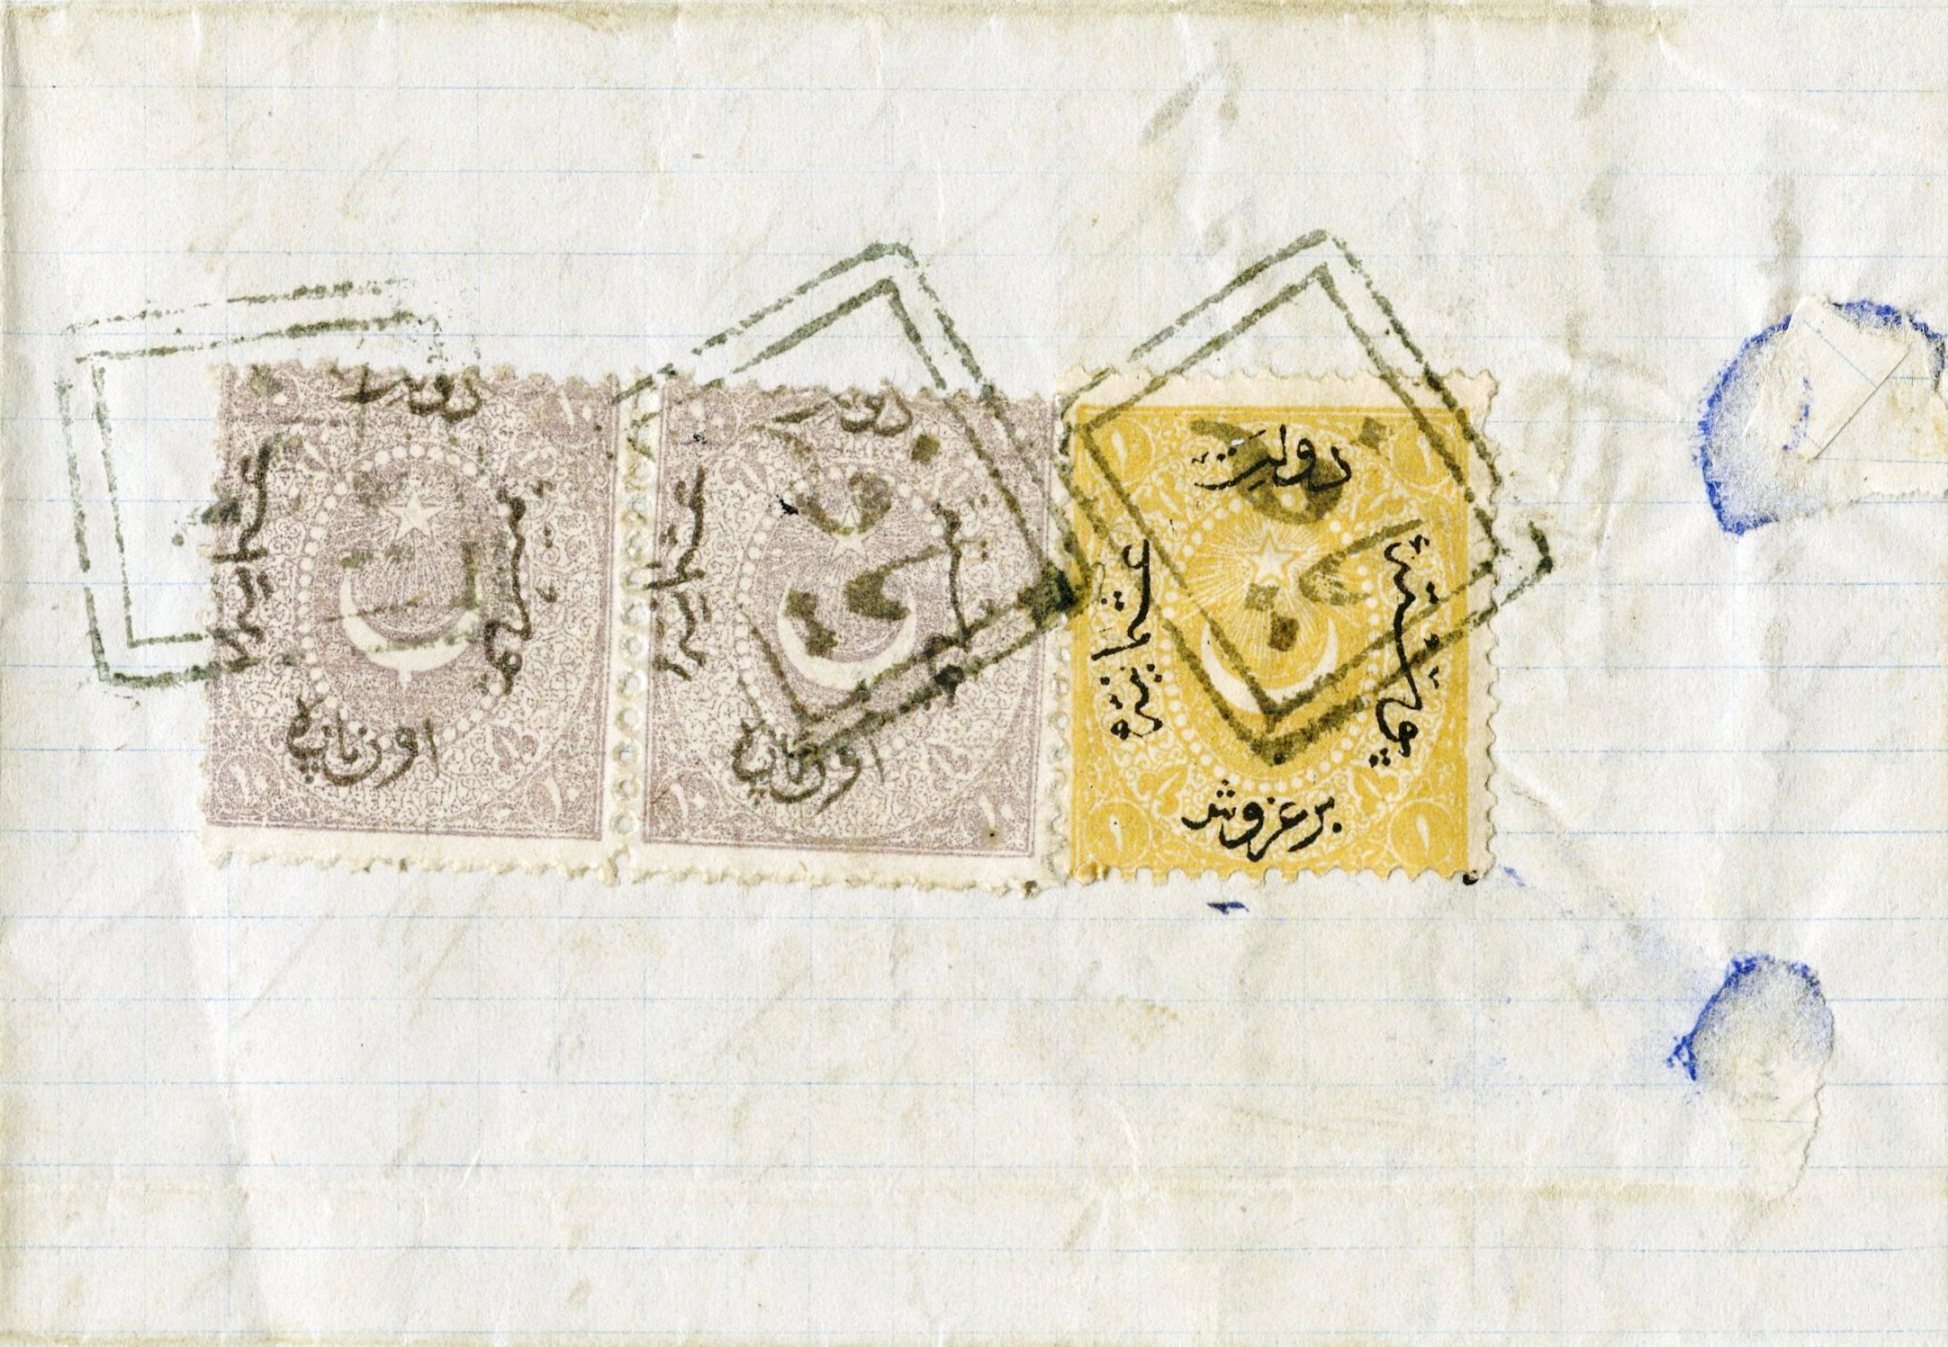 Lot 32 - TURKISH POST  -  Tel Aviv Stamps Ltd. Auction #50